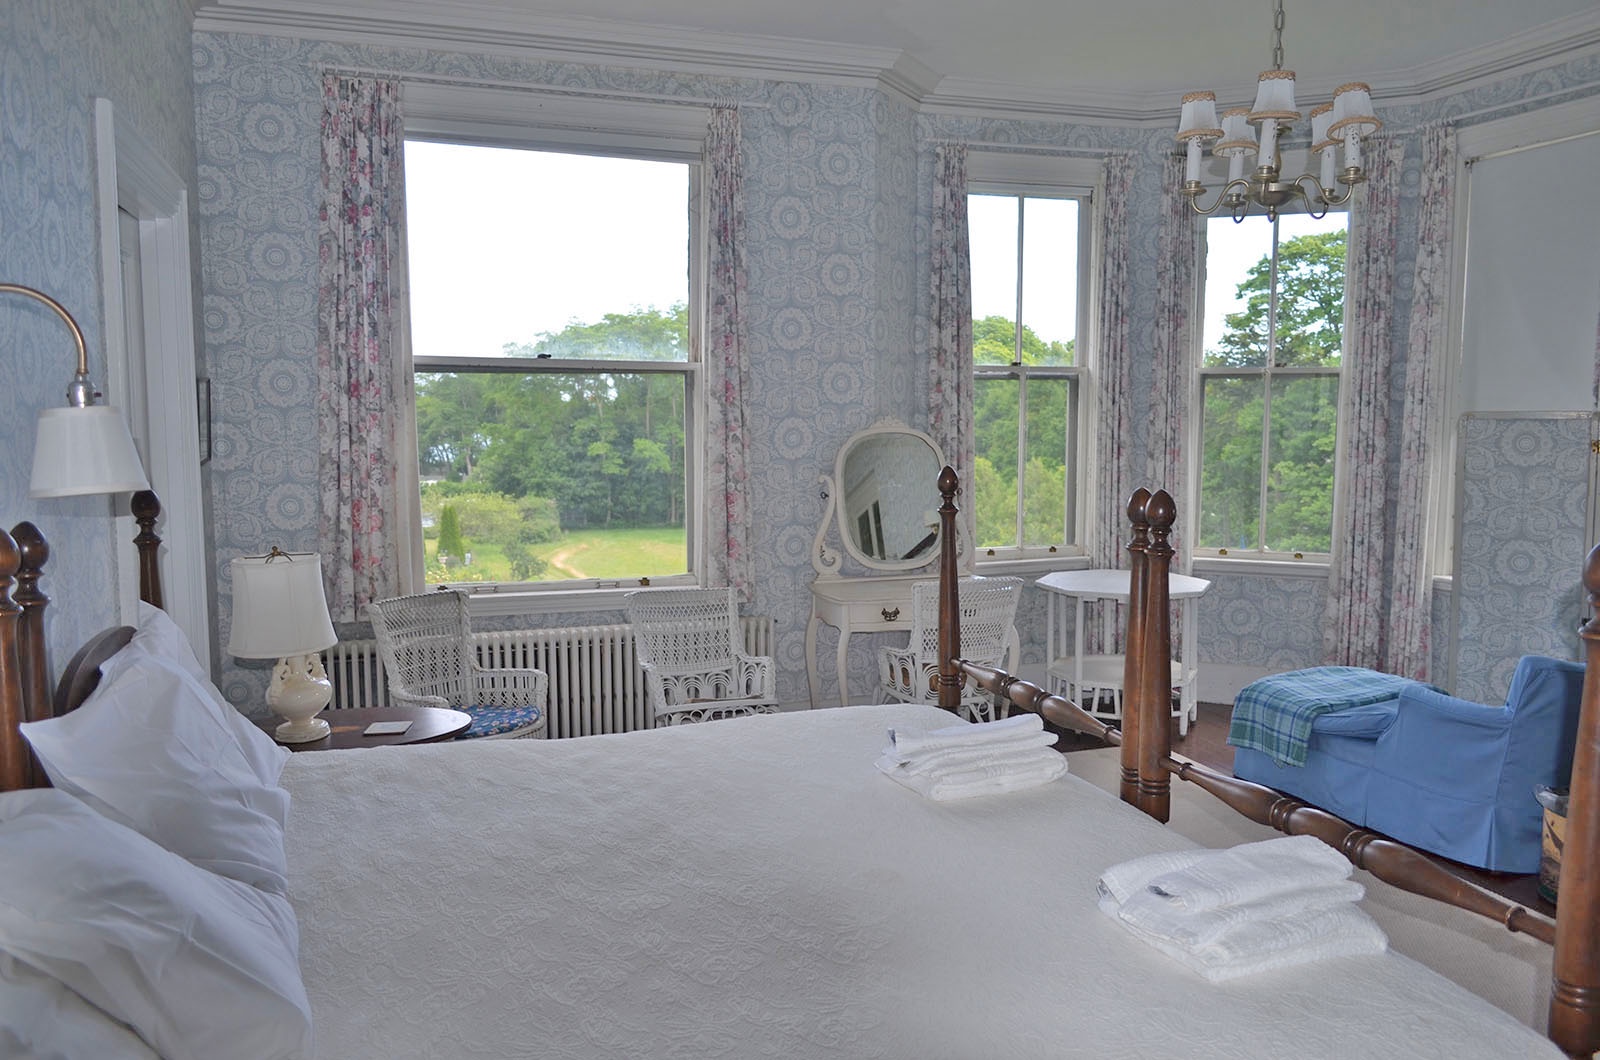 Bedroom 1: The Primary bedroom has large windows and ocean views.